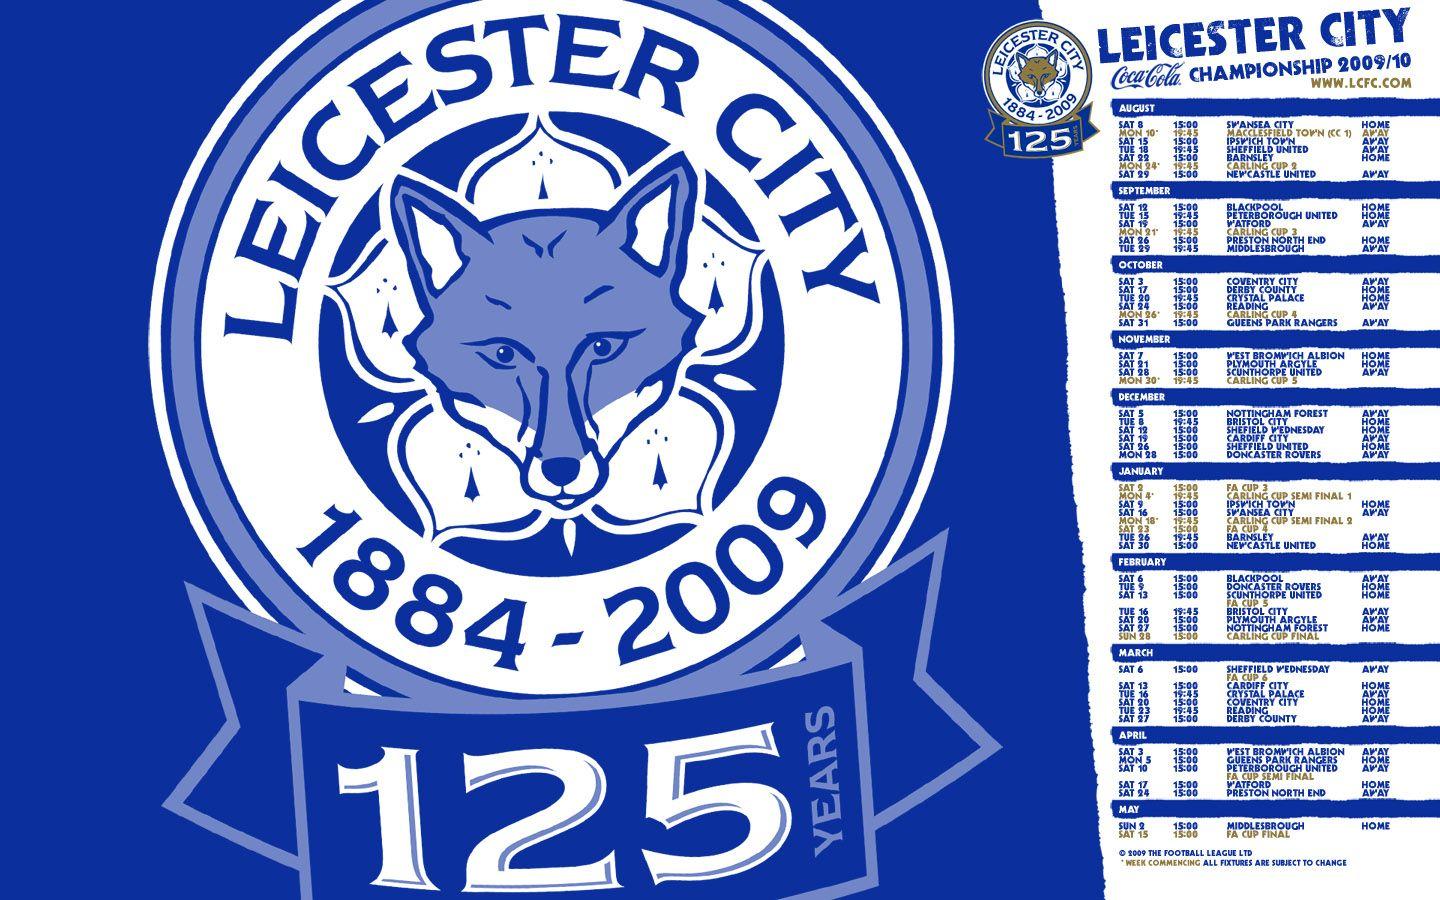 Leicester City Football Club Wallpaper #LeicesterCityFC #Wallpaper